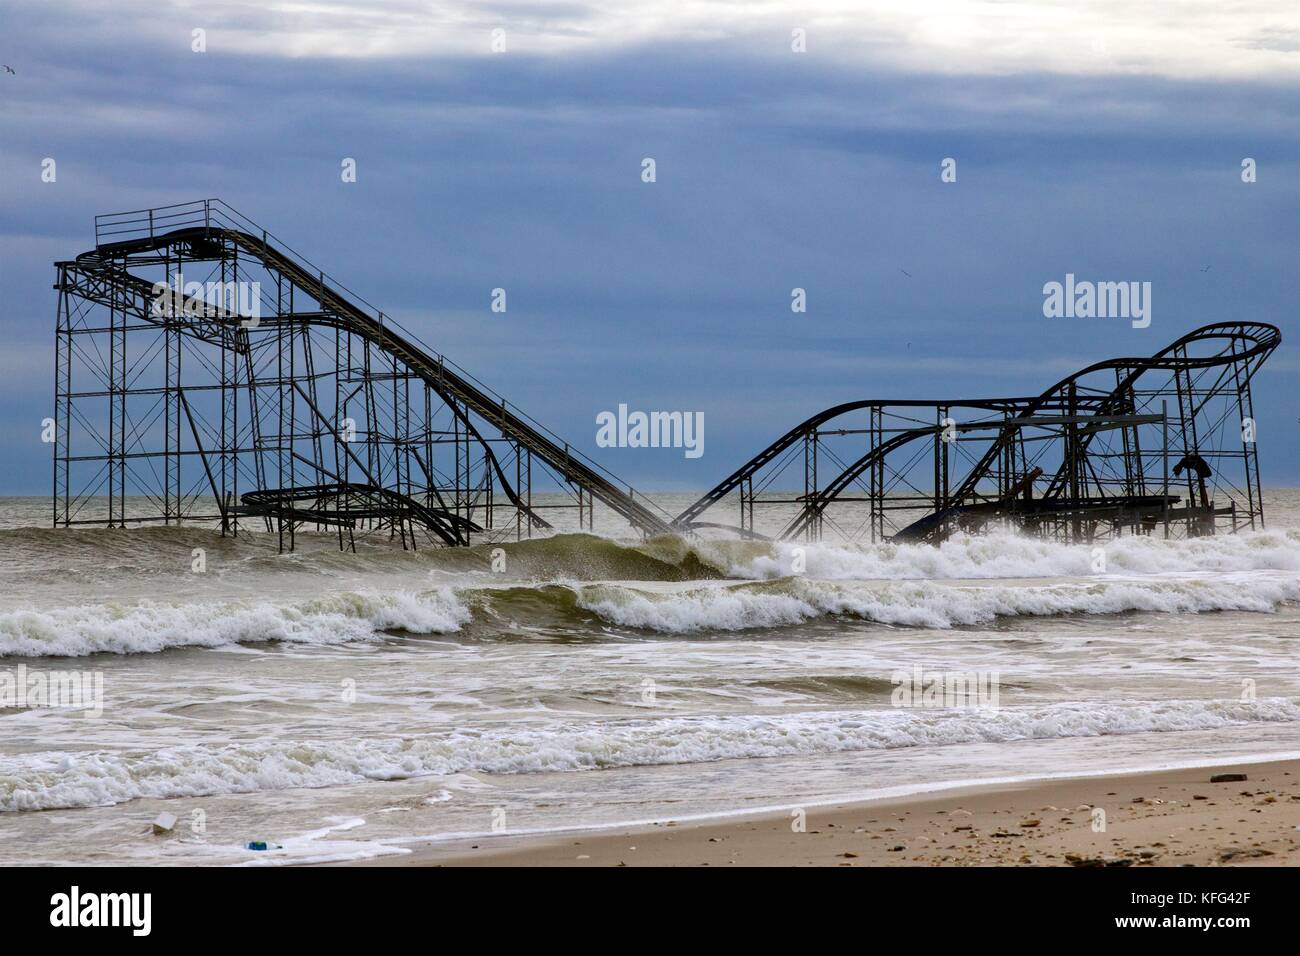 December 5, 2012 -Seaside Heights, NJ, USA: Superstorm Sandy left the Jetstar roller coaster sitting in the Atlantic Ocean. Stock Photo